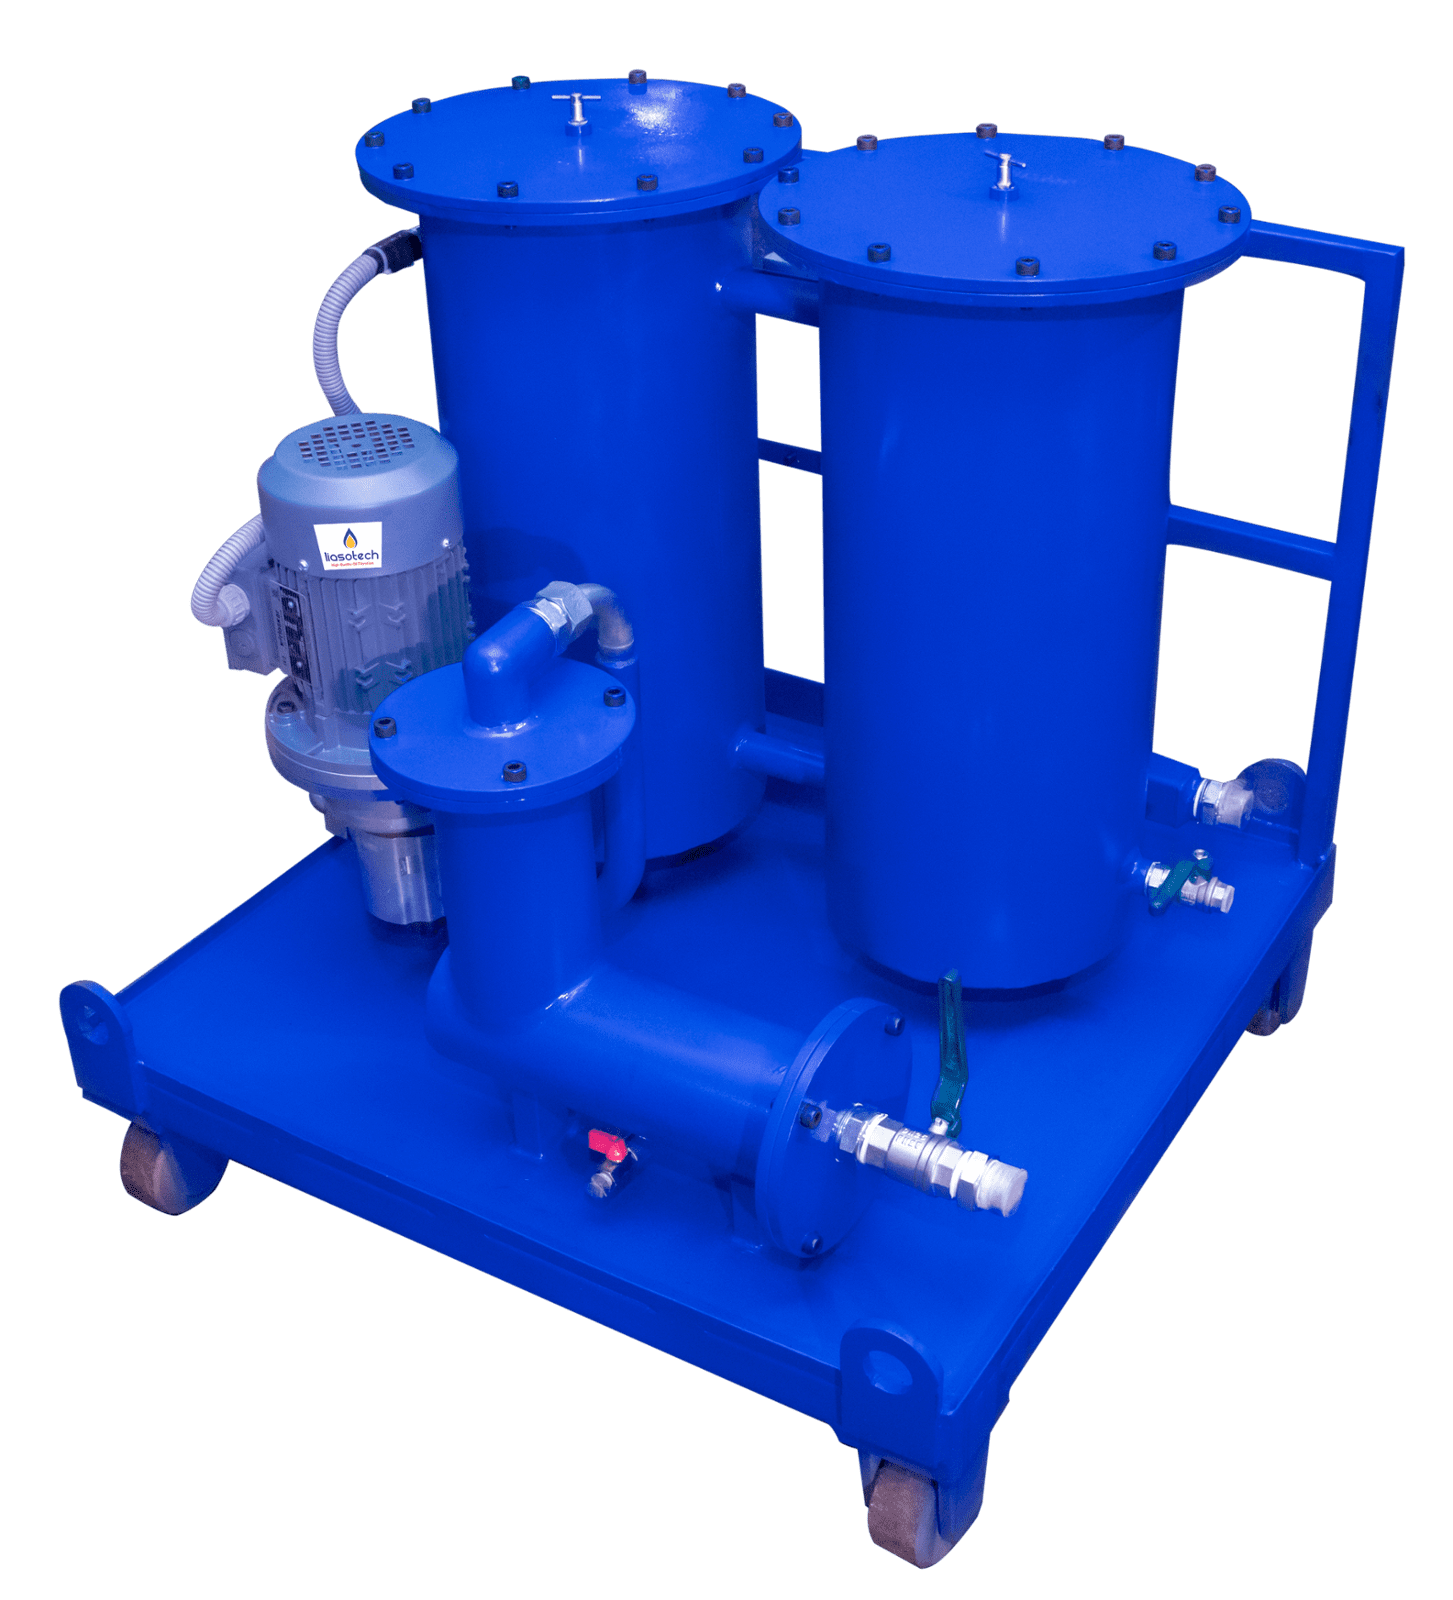 Liasotech Gear Oil Filtration System